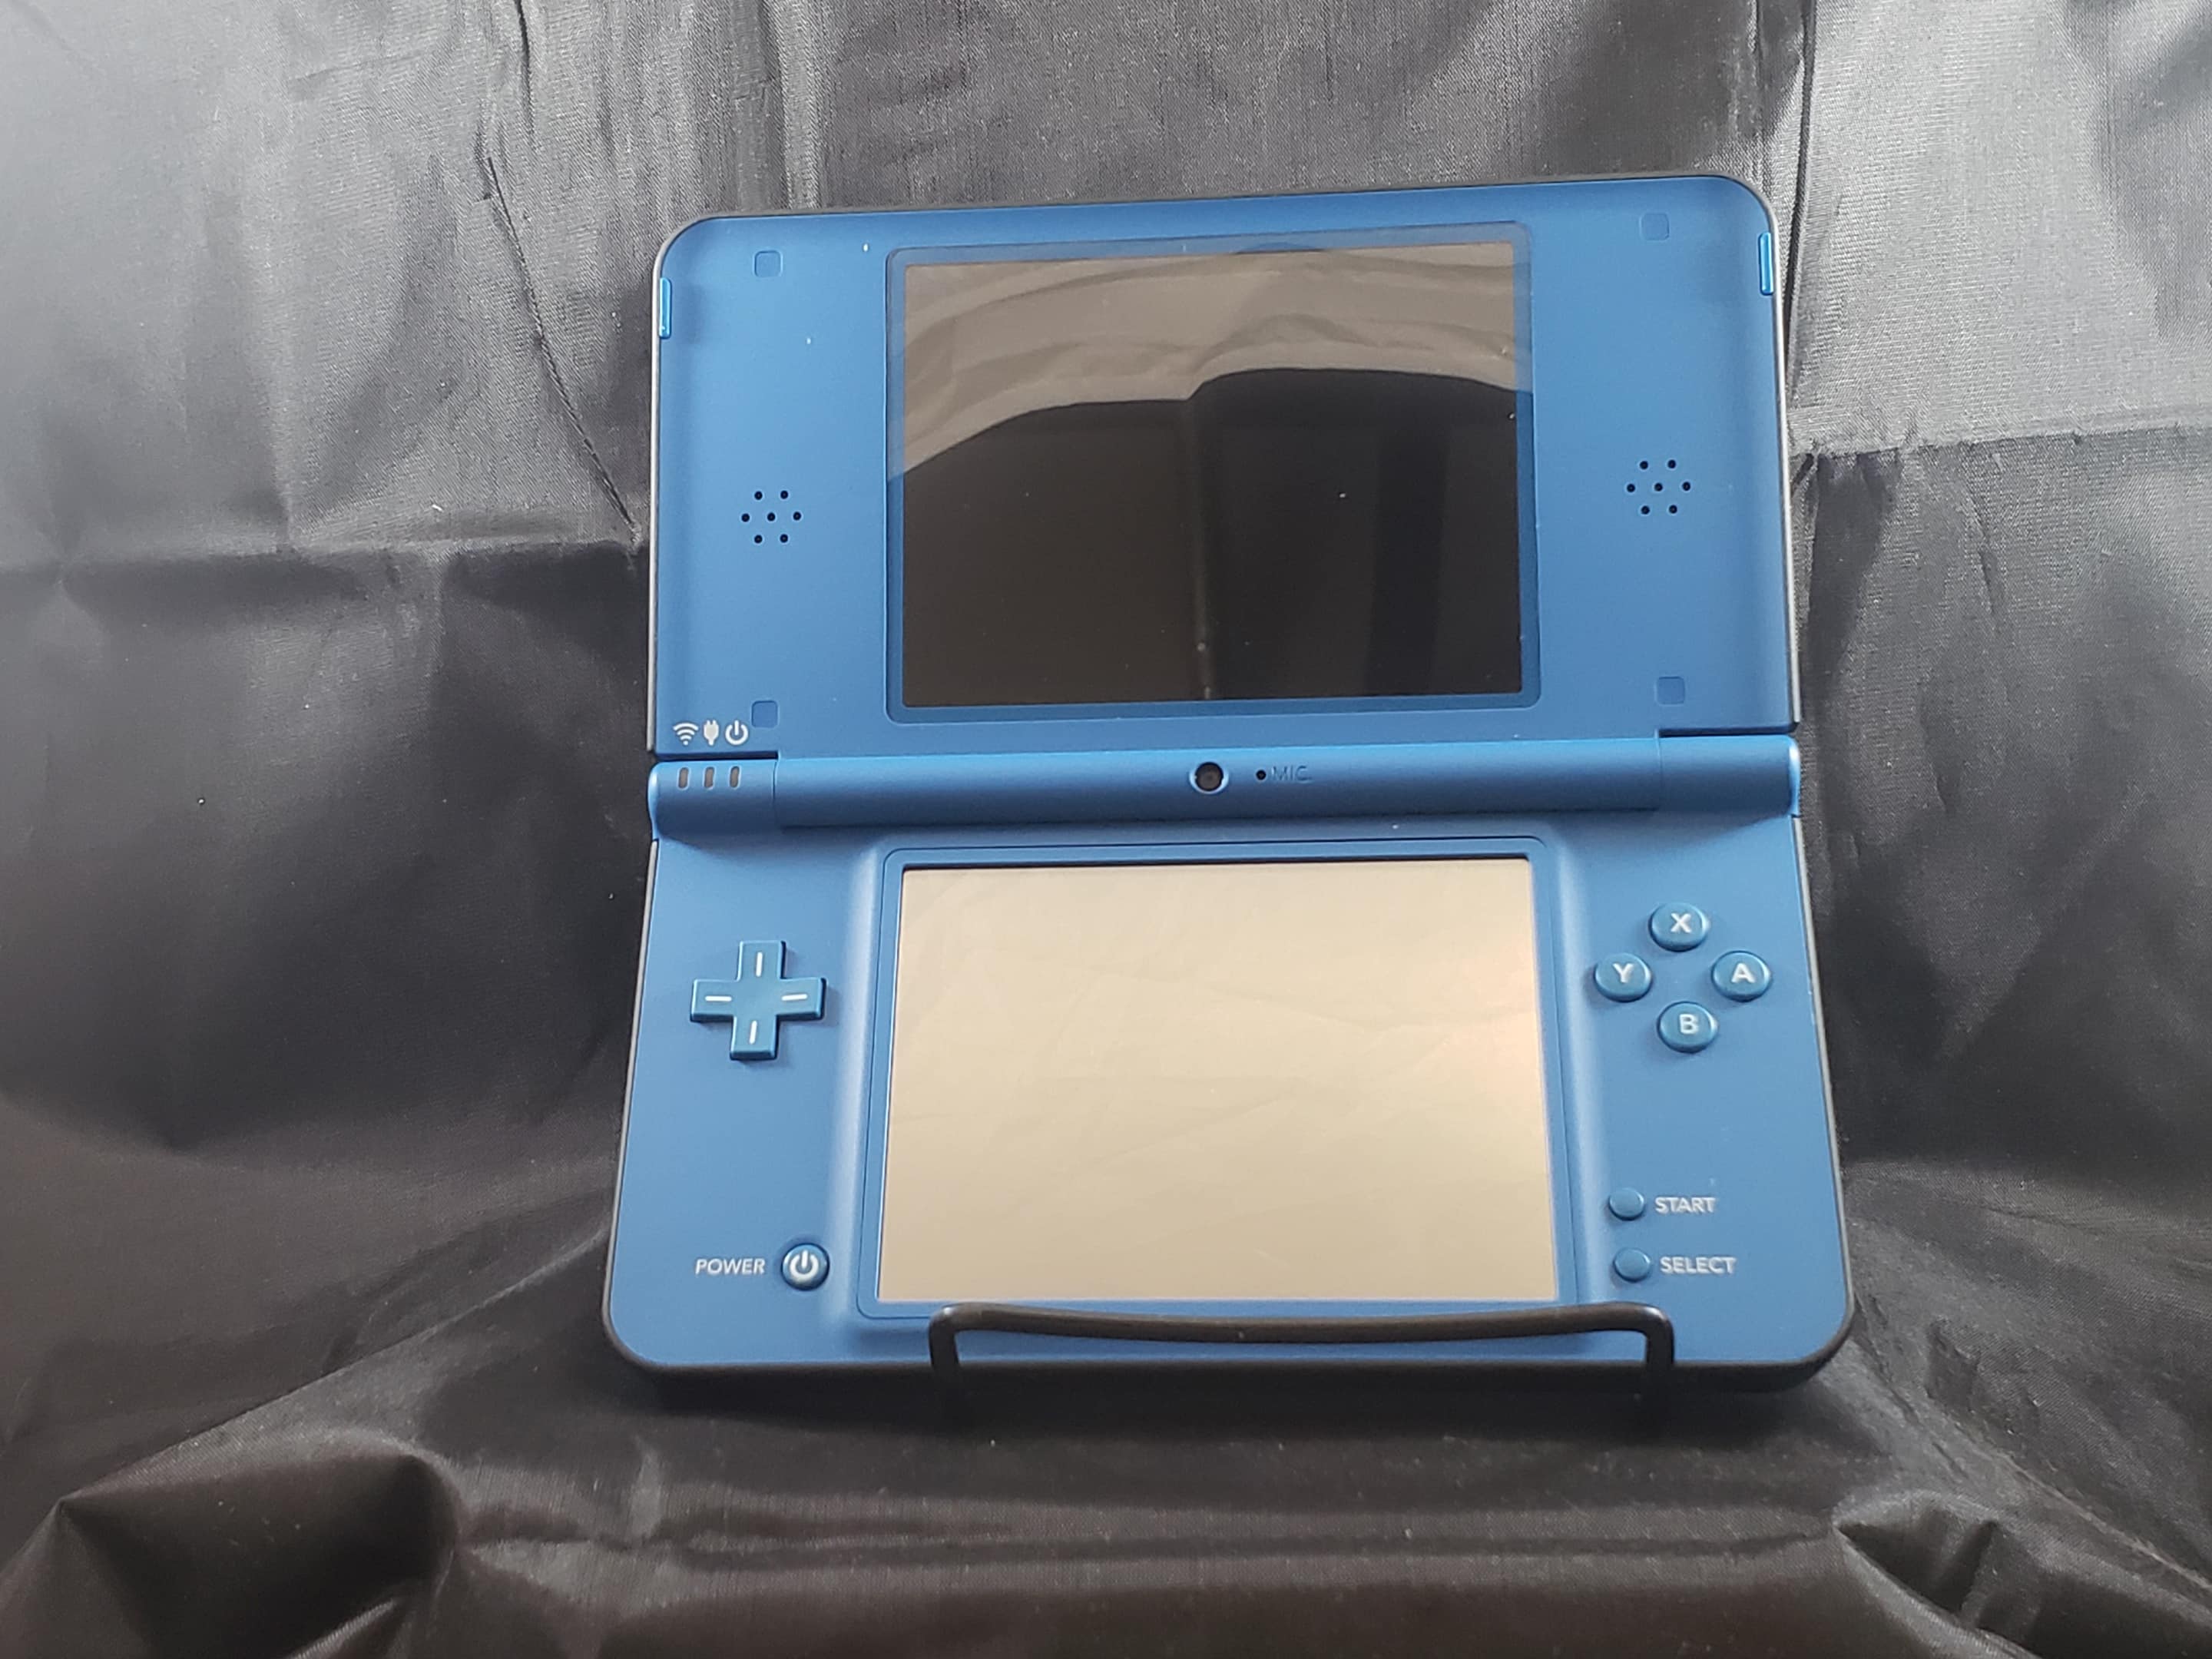 Nintendo DSi XL Midnight Blue System